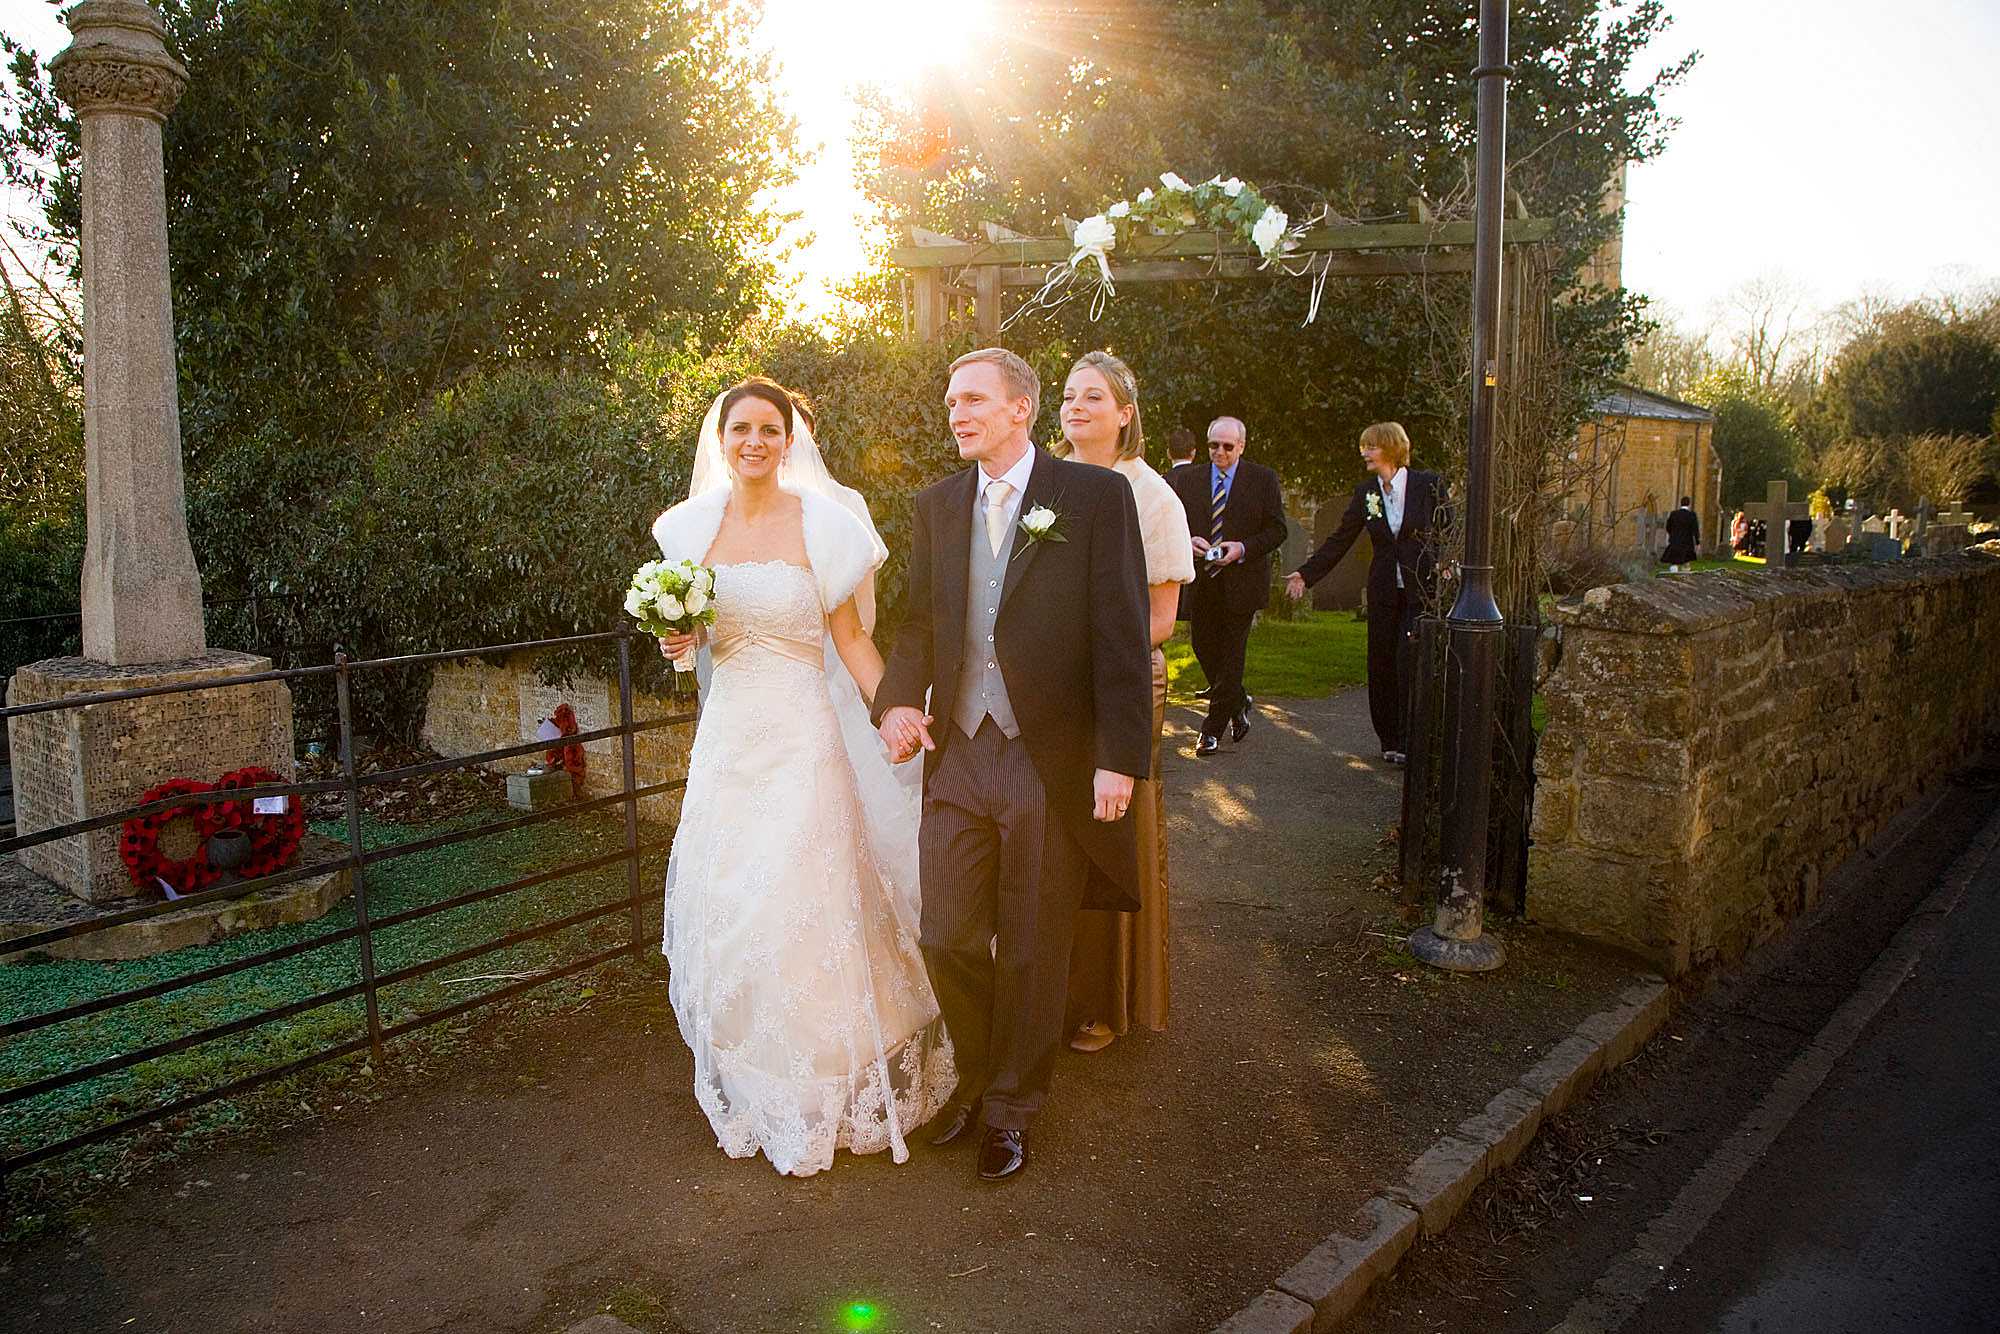 Rushton Hall wedding photographer